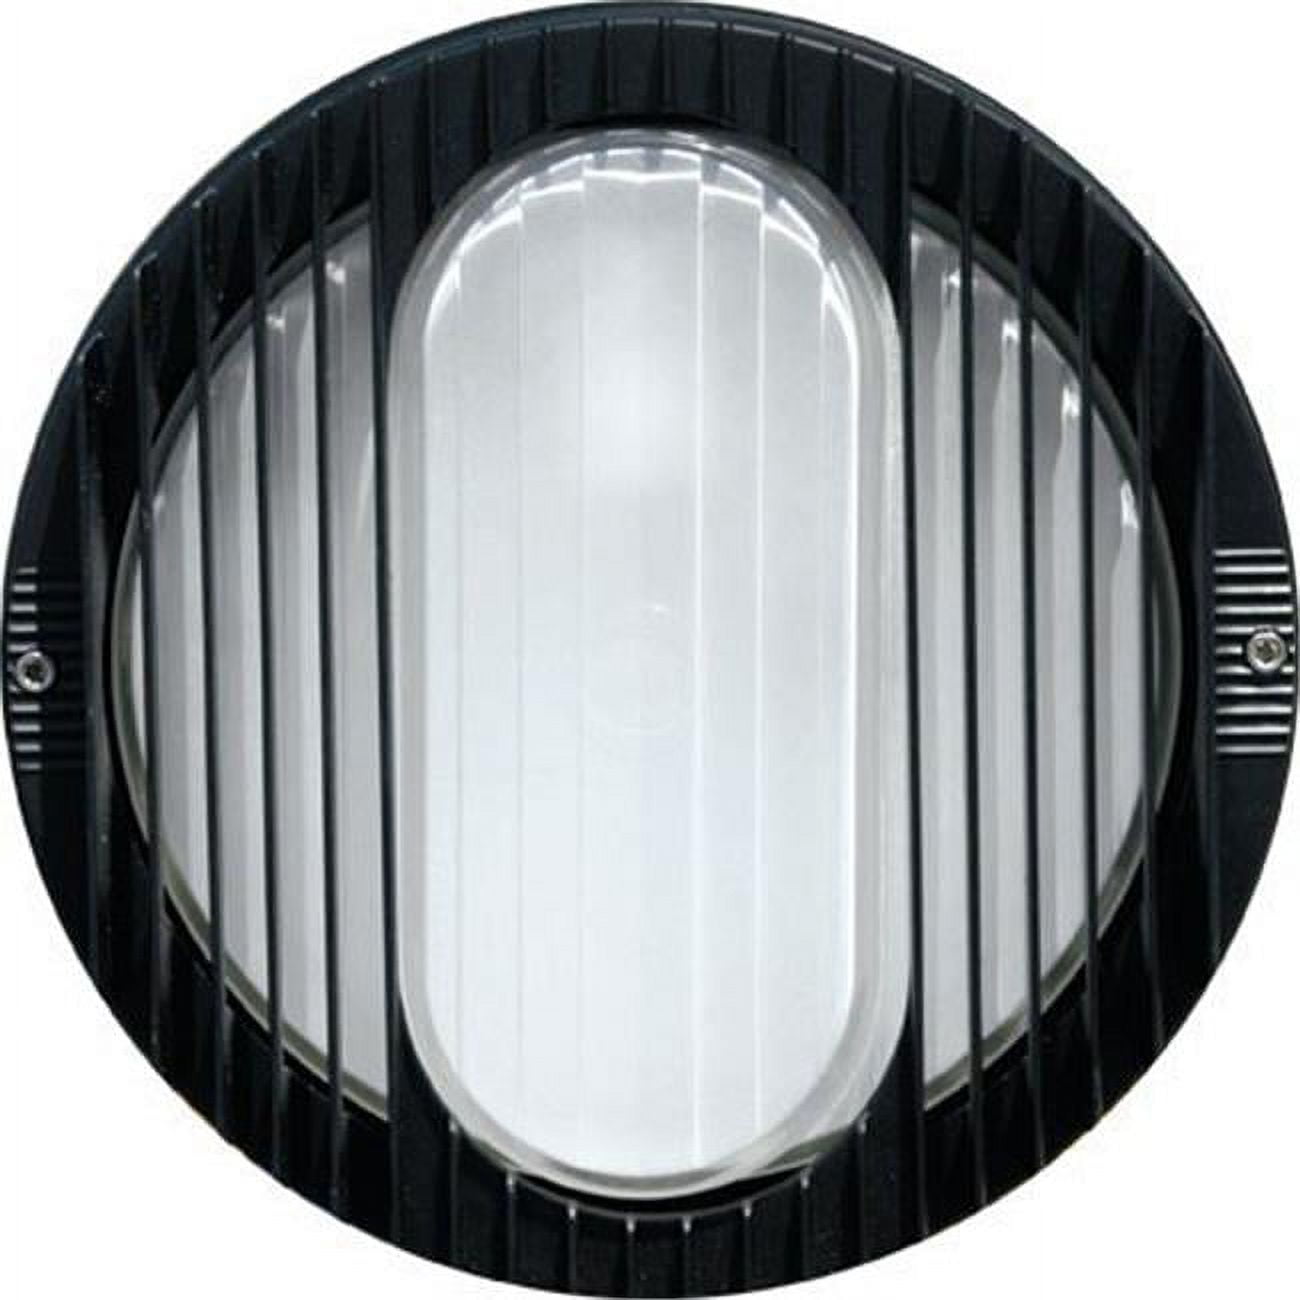 Picture of Dabmar Lighting W3050-LED12-B Cast Aluminum Wall Fixture LED - 12W 120V, Black